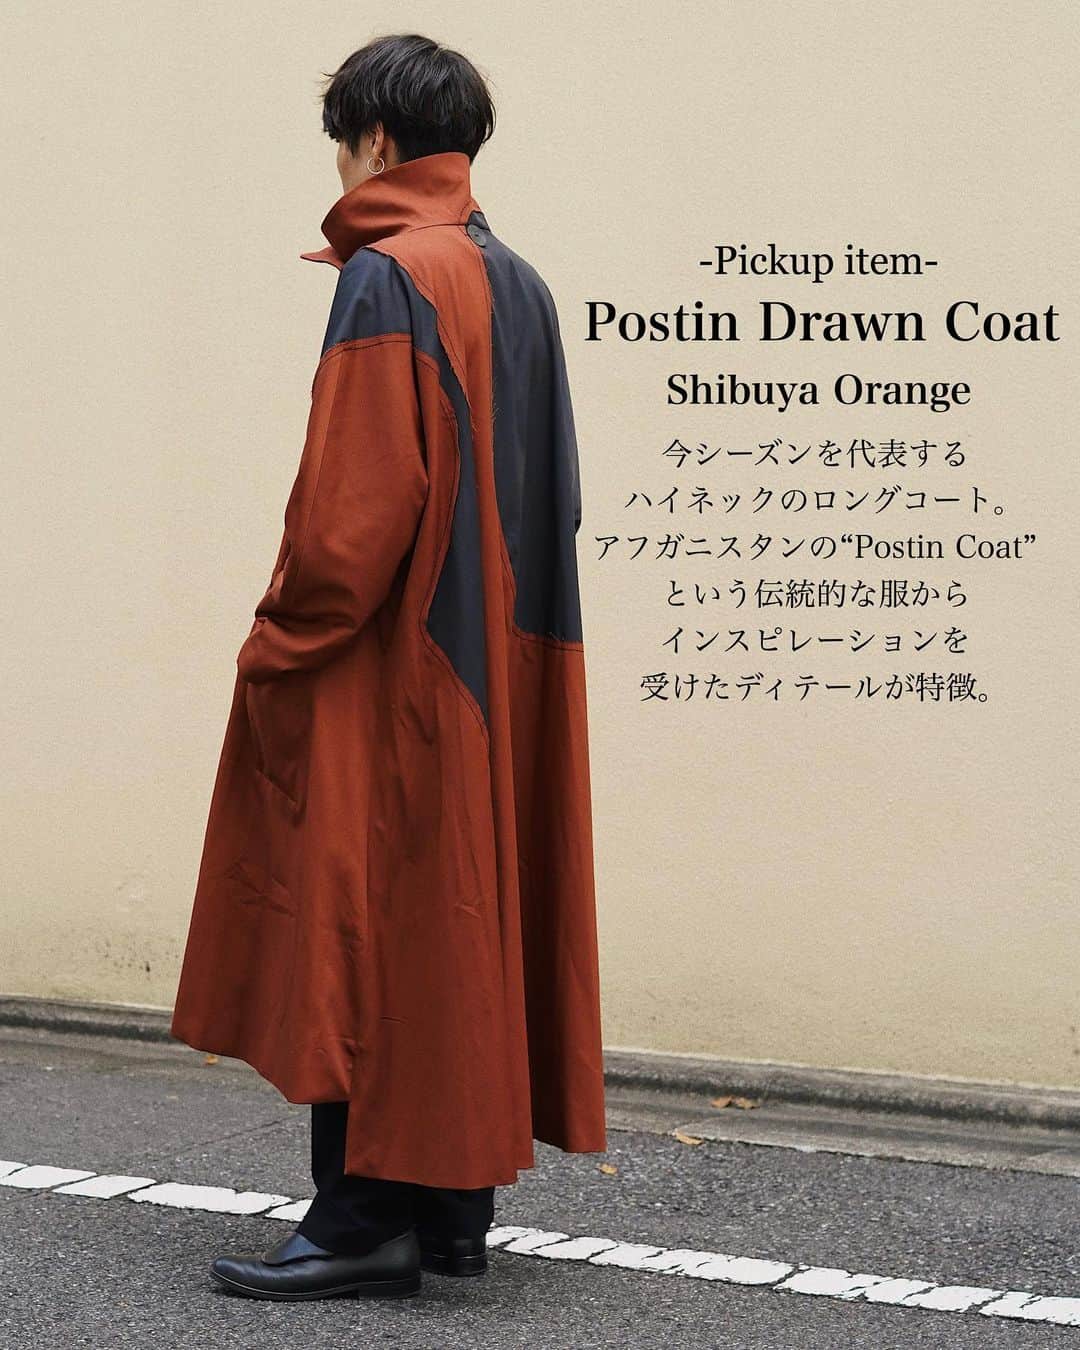 yuのメンズアイテムOmar afridi Postin drawn coat 19AW コート 